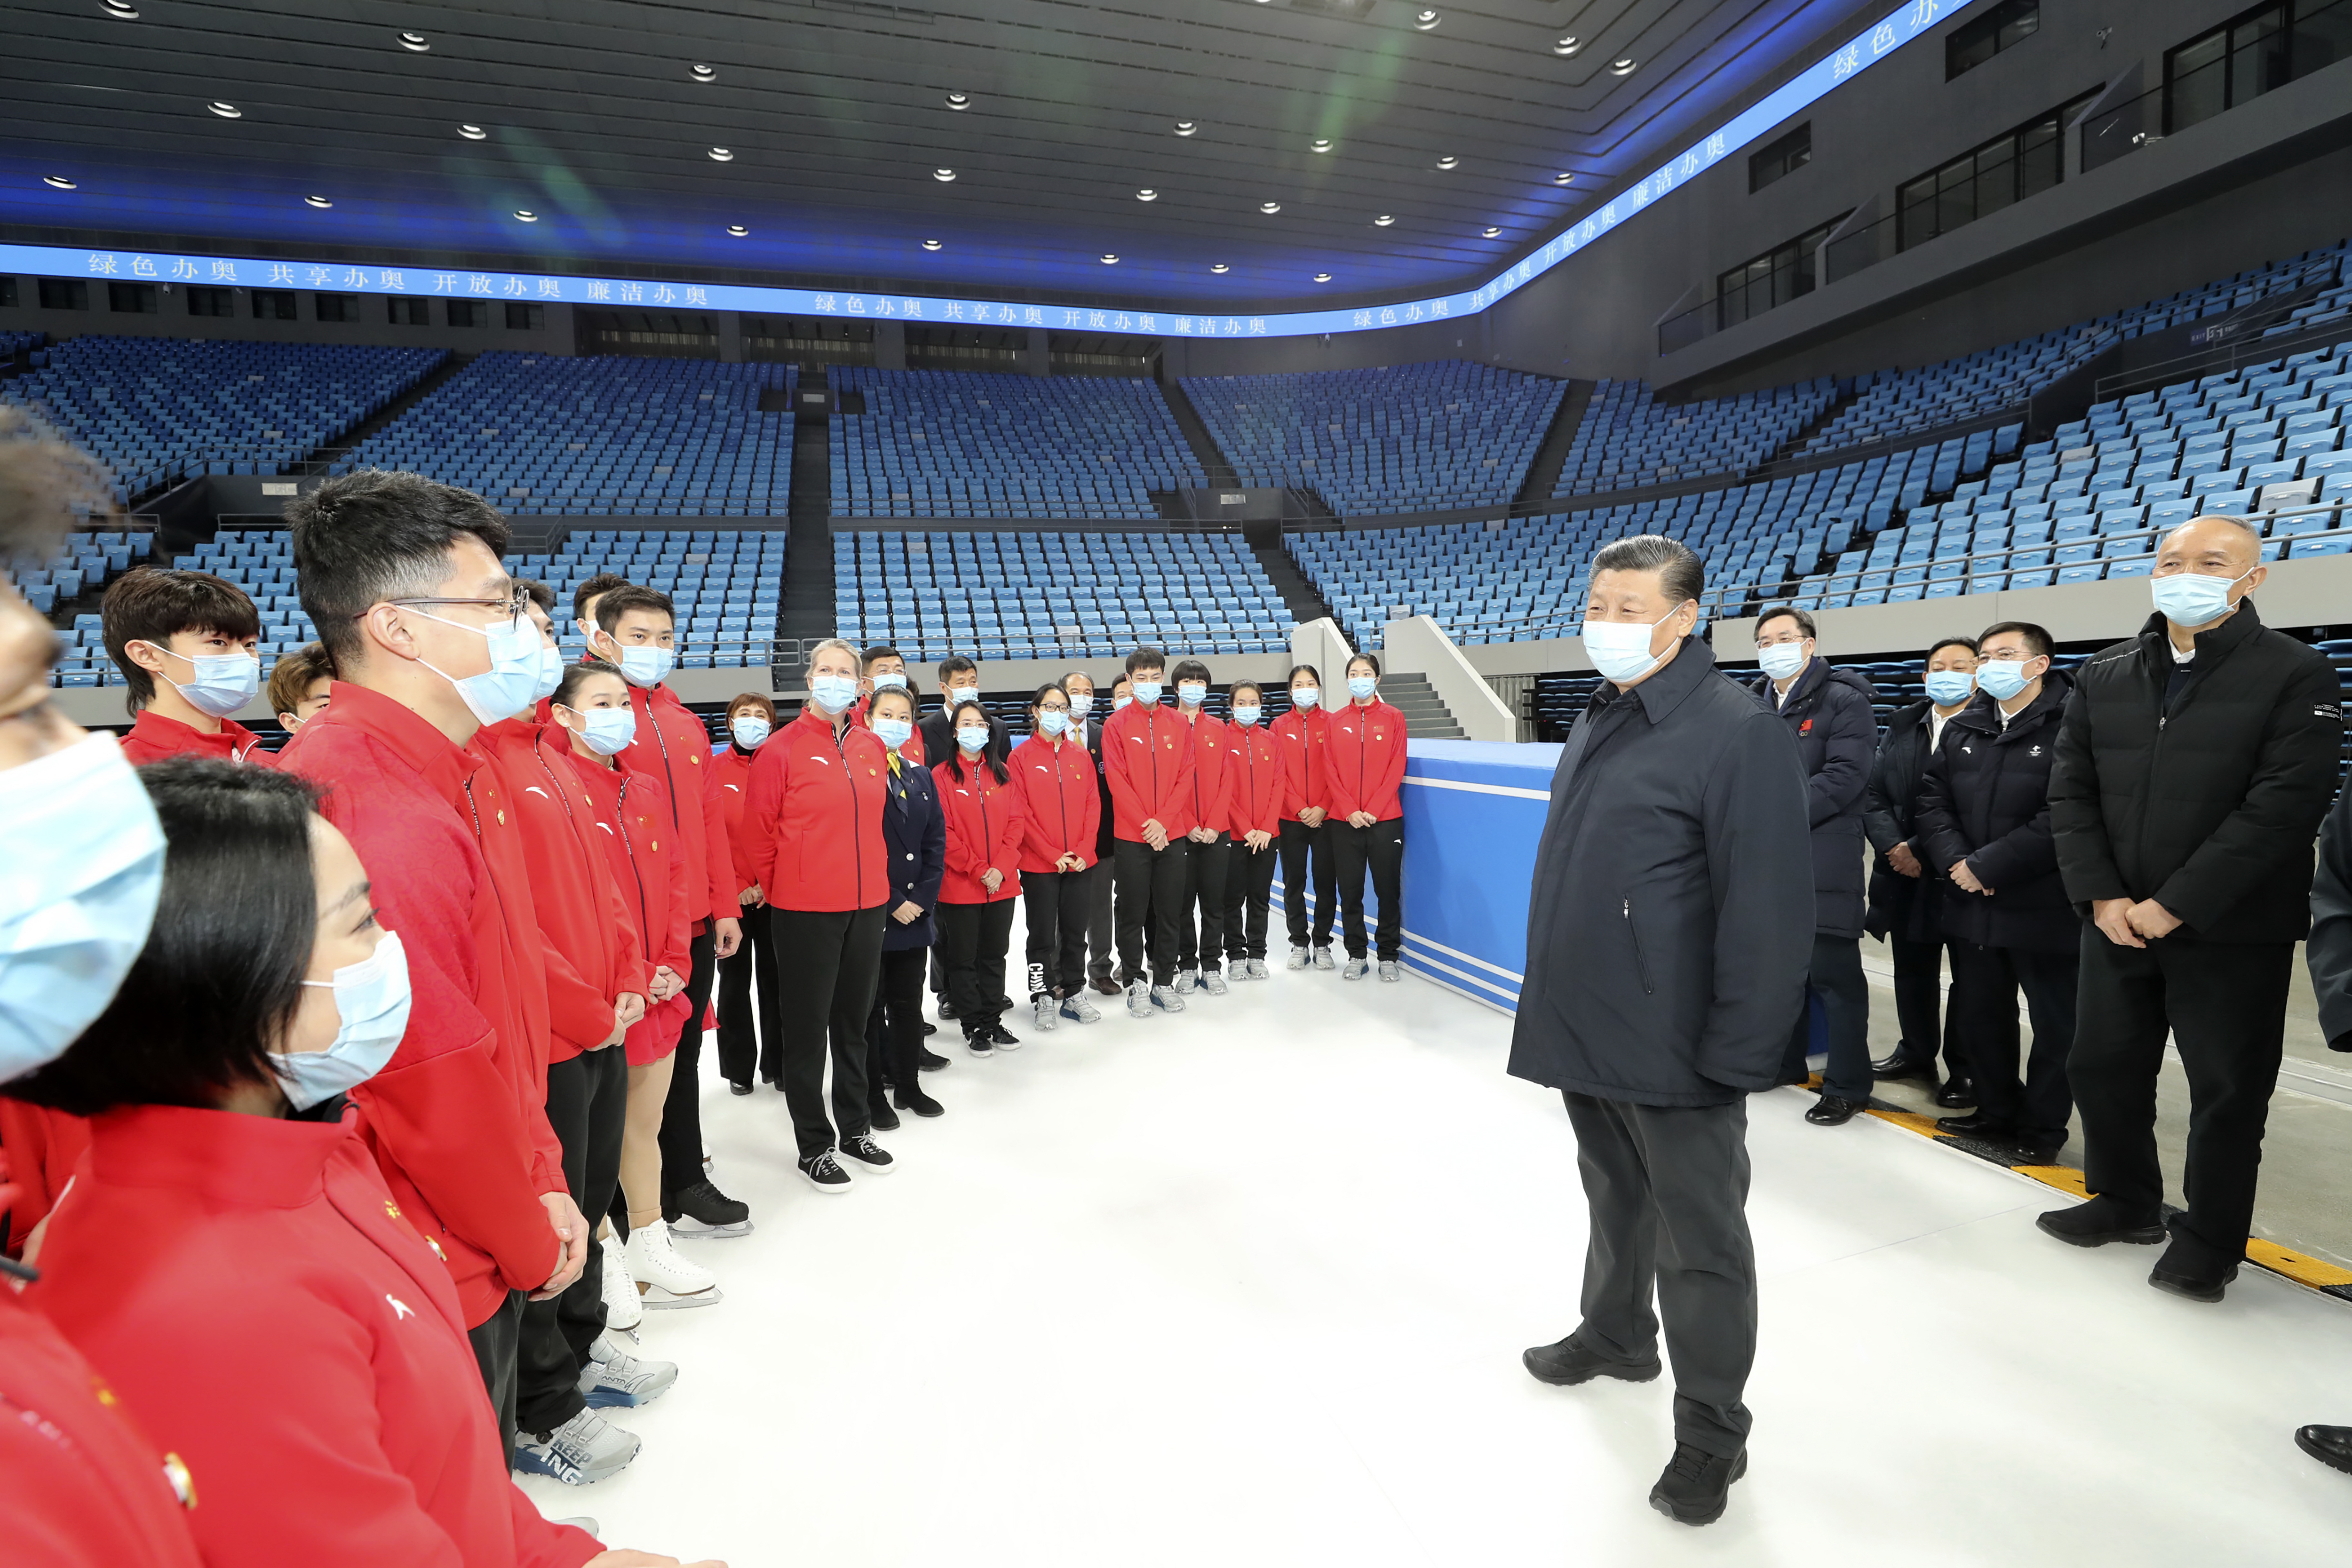 2022 Winter Olympics, Beijing: COVID-19 regulations